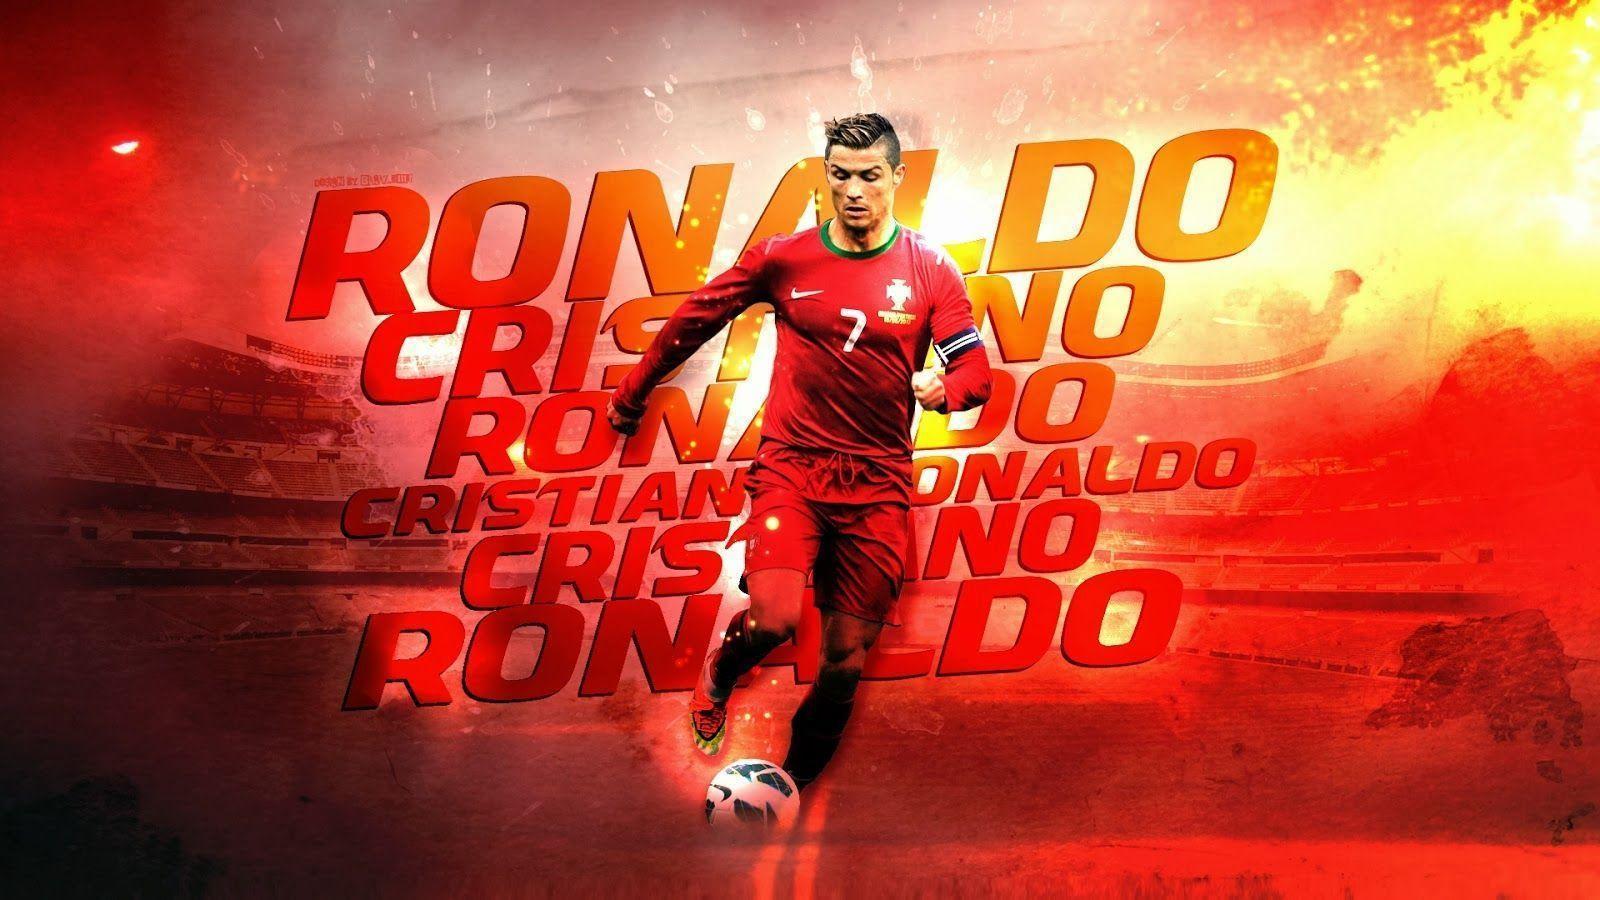 Cristiano Ronaldo New HD Wallpapers 2014